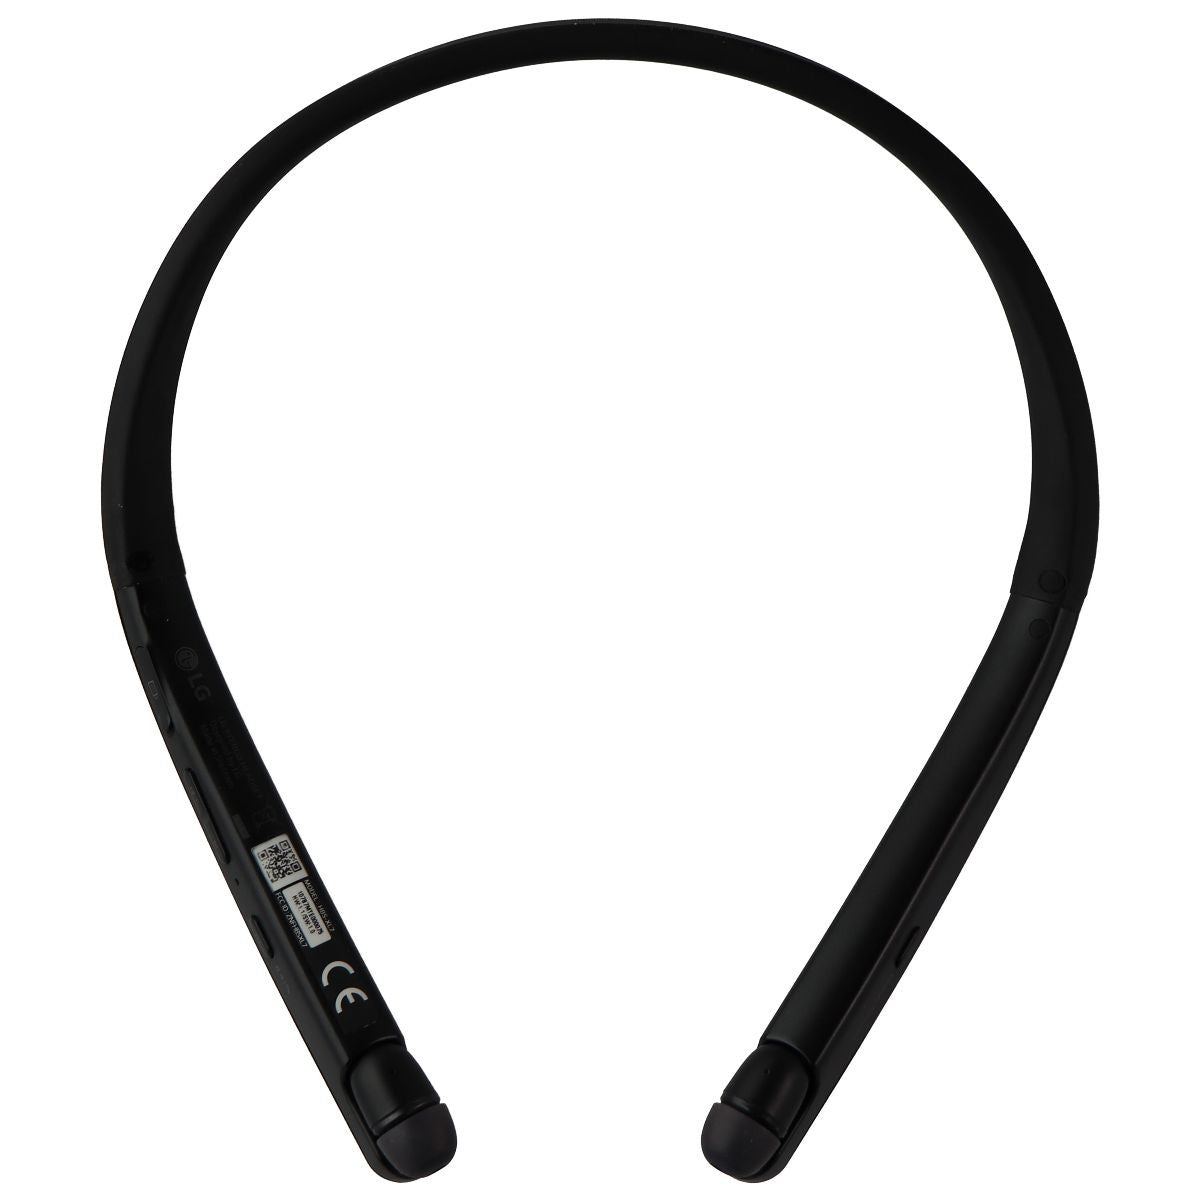 LG Tone Flex Hi-Fi Premium Wireless In-Ear Headphones - Black (HBS-XL7) Portable Audio - Headphones LG    - Simple Cell Bulk Wholesale Pricing - USA Seller